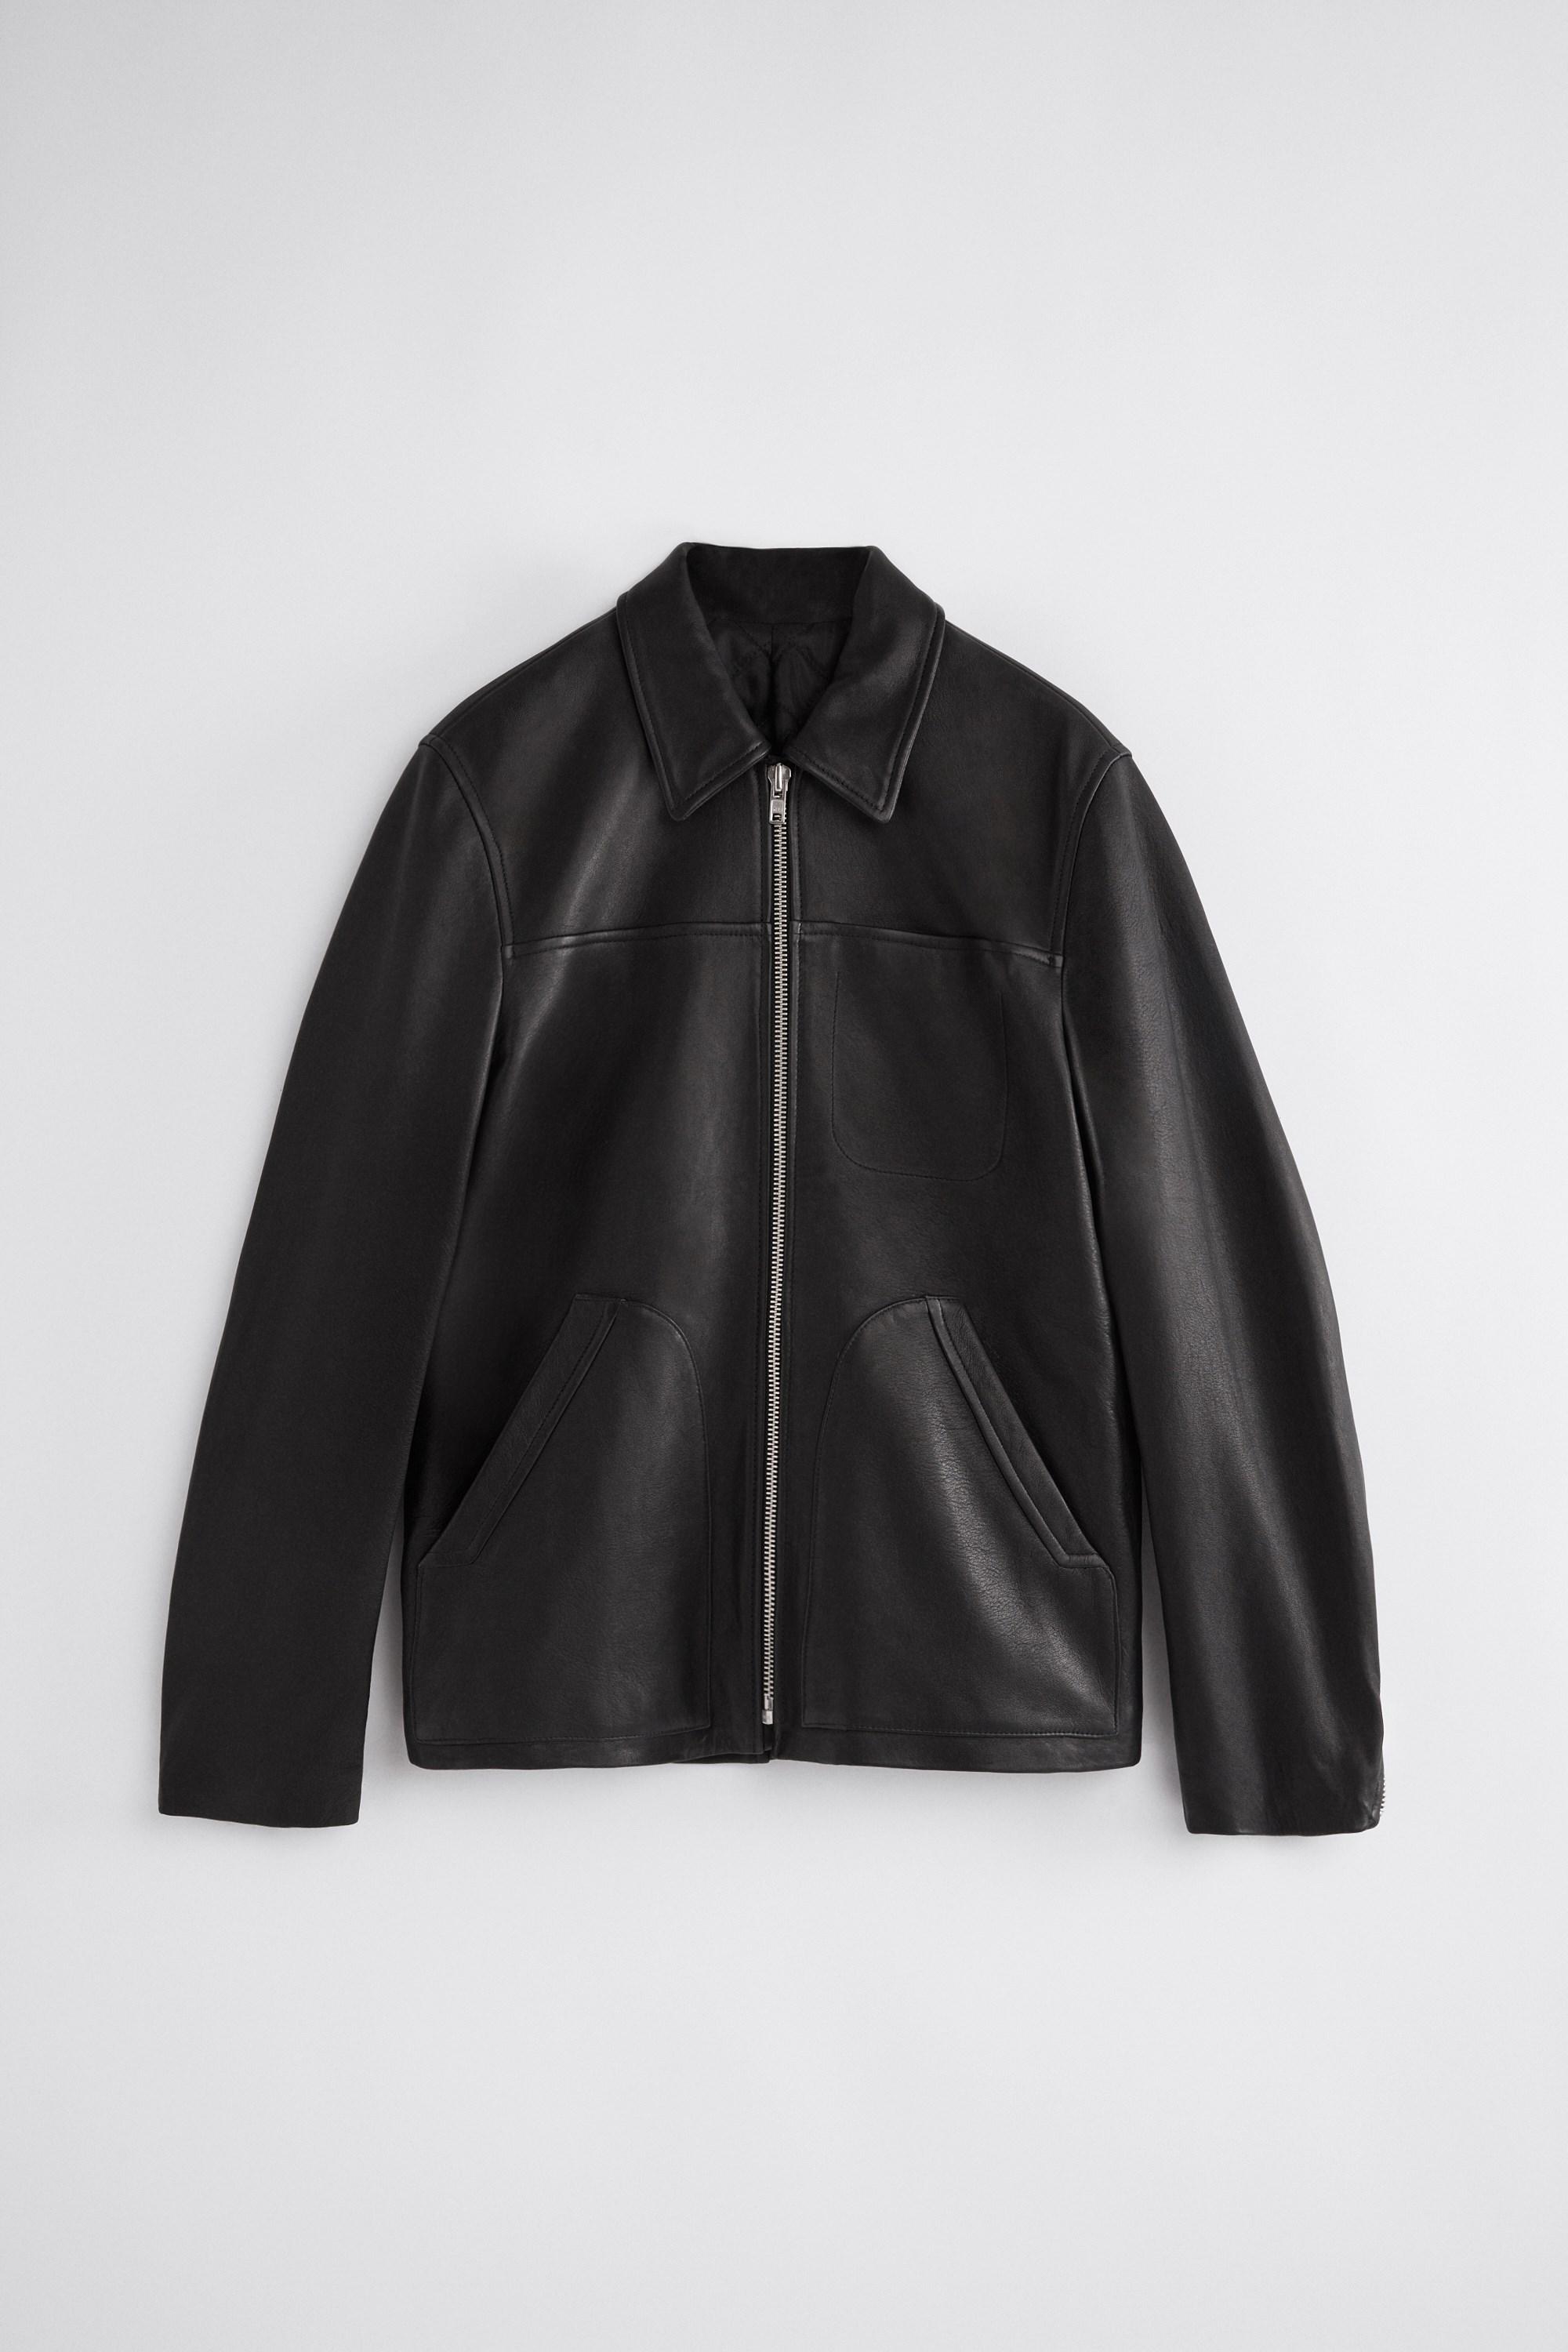 Filippa K Ames Leather Jacket in Black for Men | Lyst UK